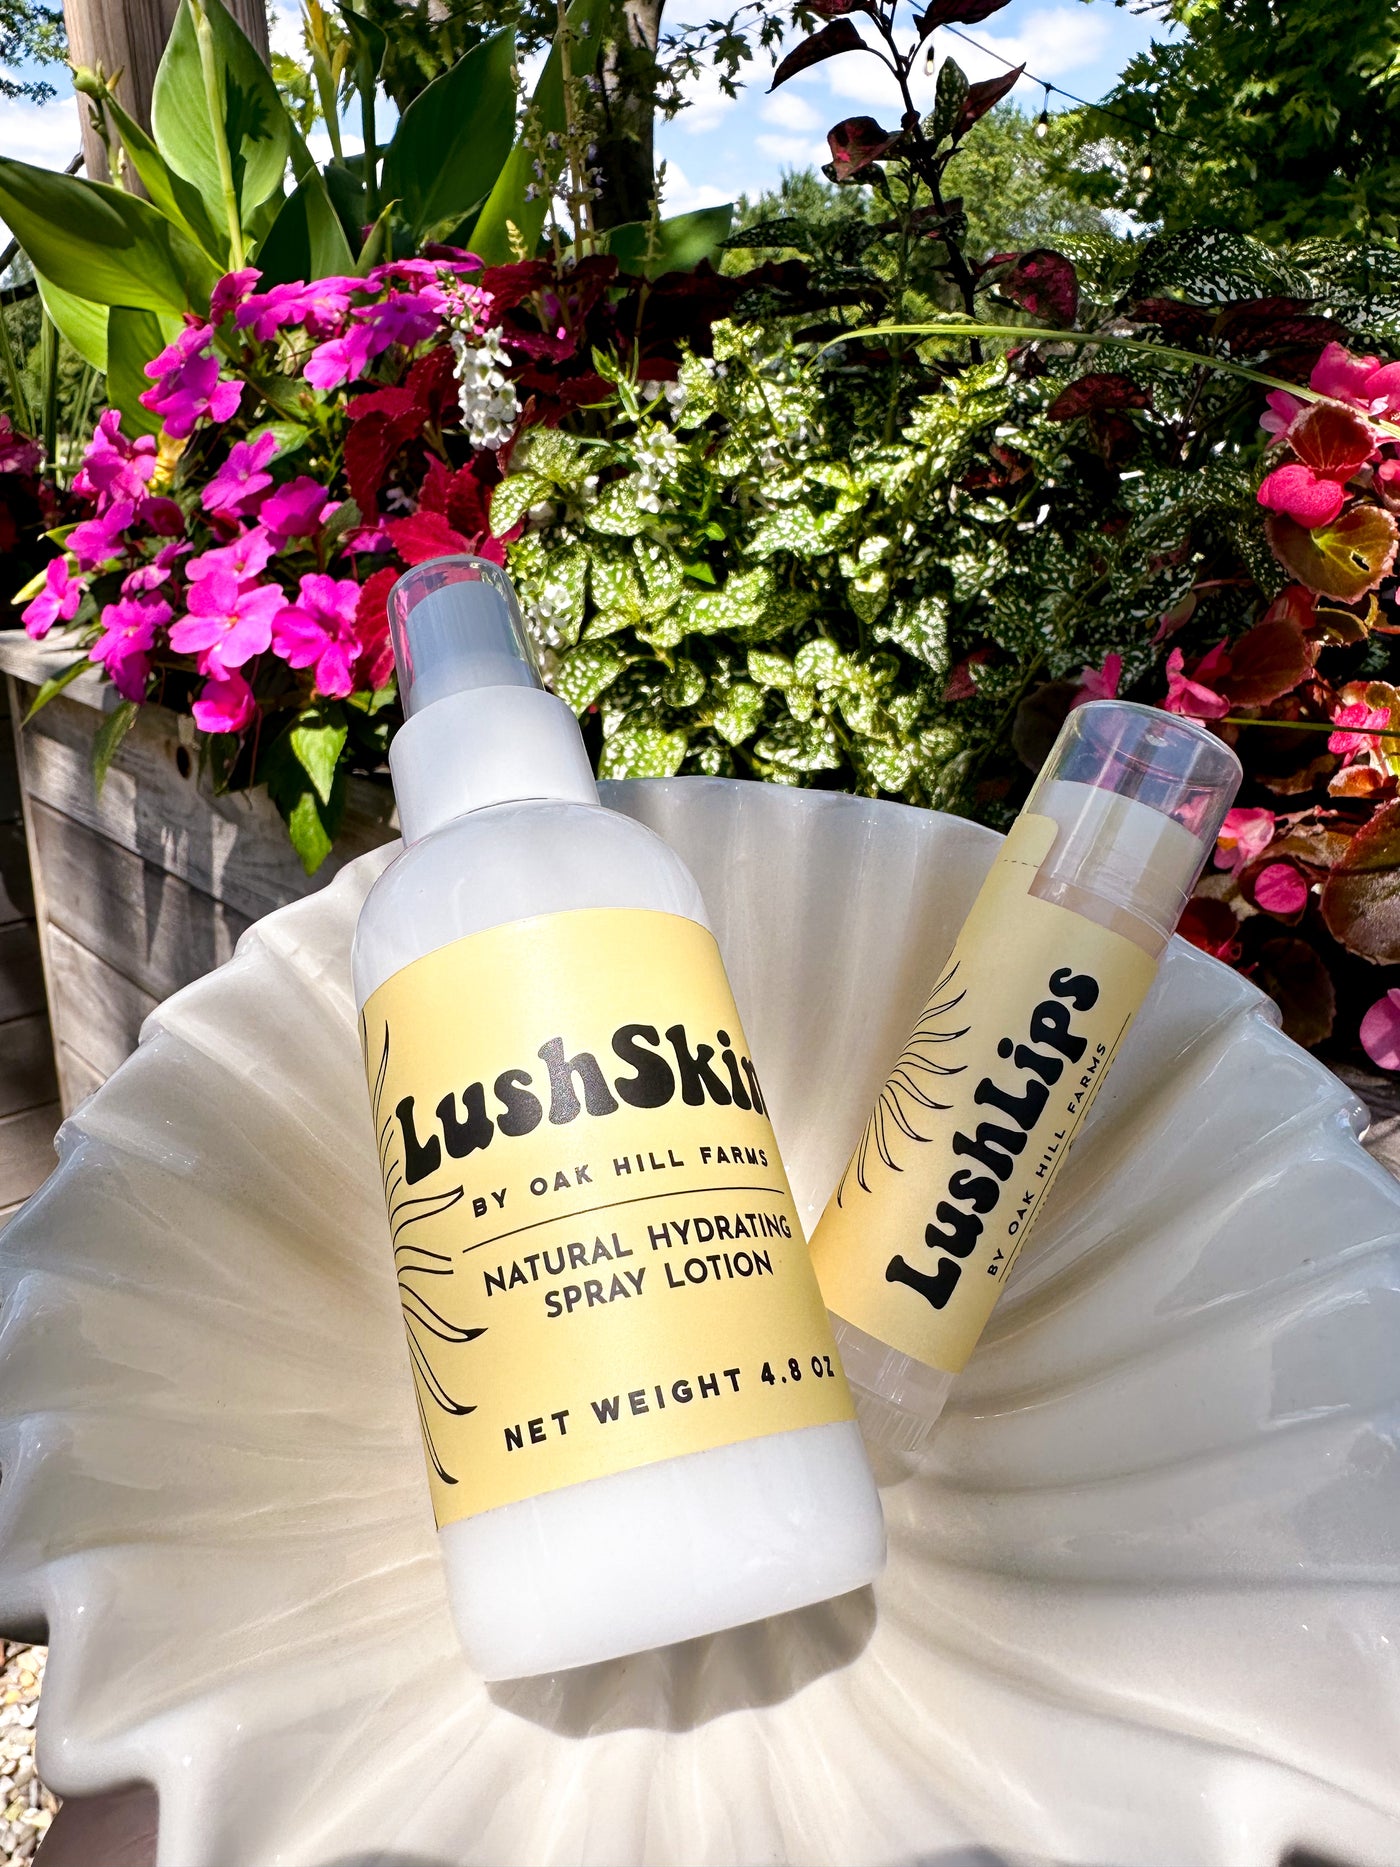 LushSkin - Natural Hydrating Spray Lotion